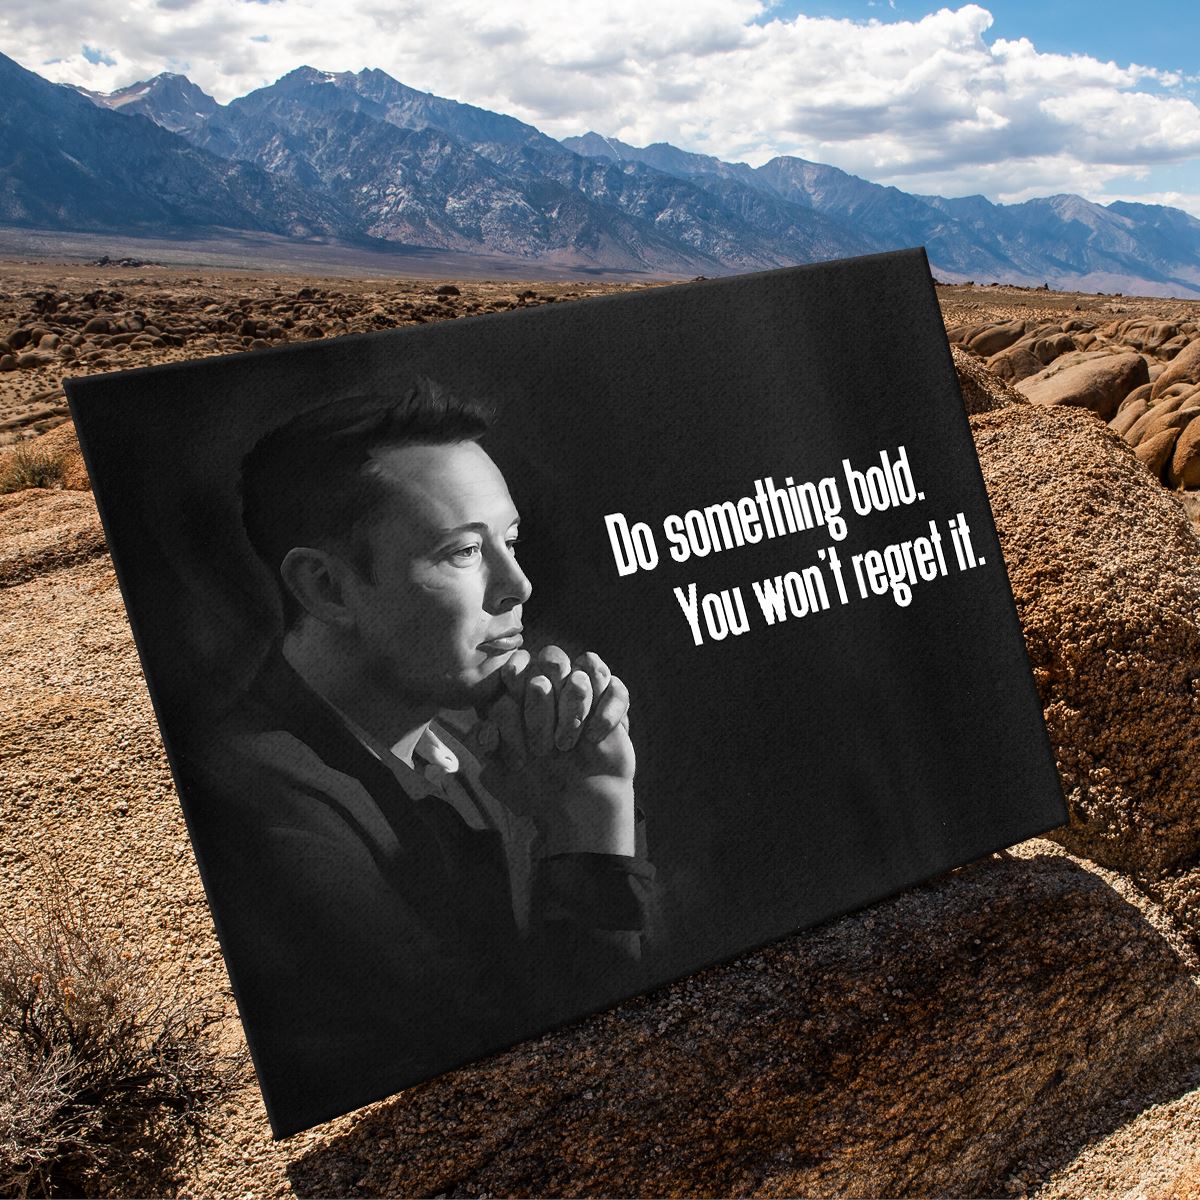 Pondering Elon